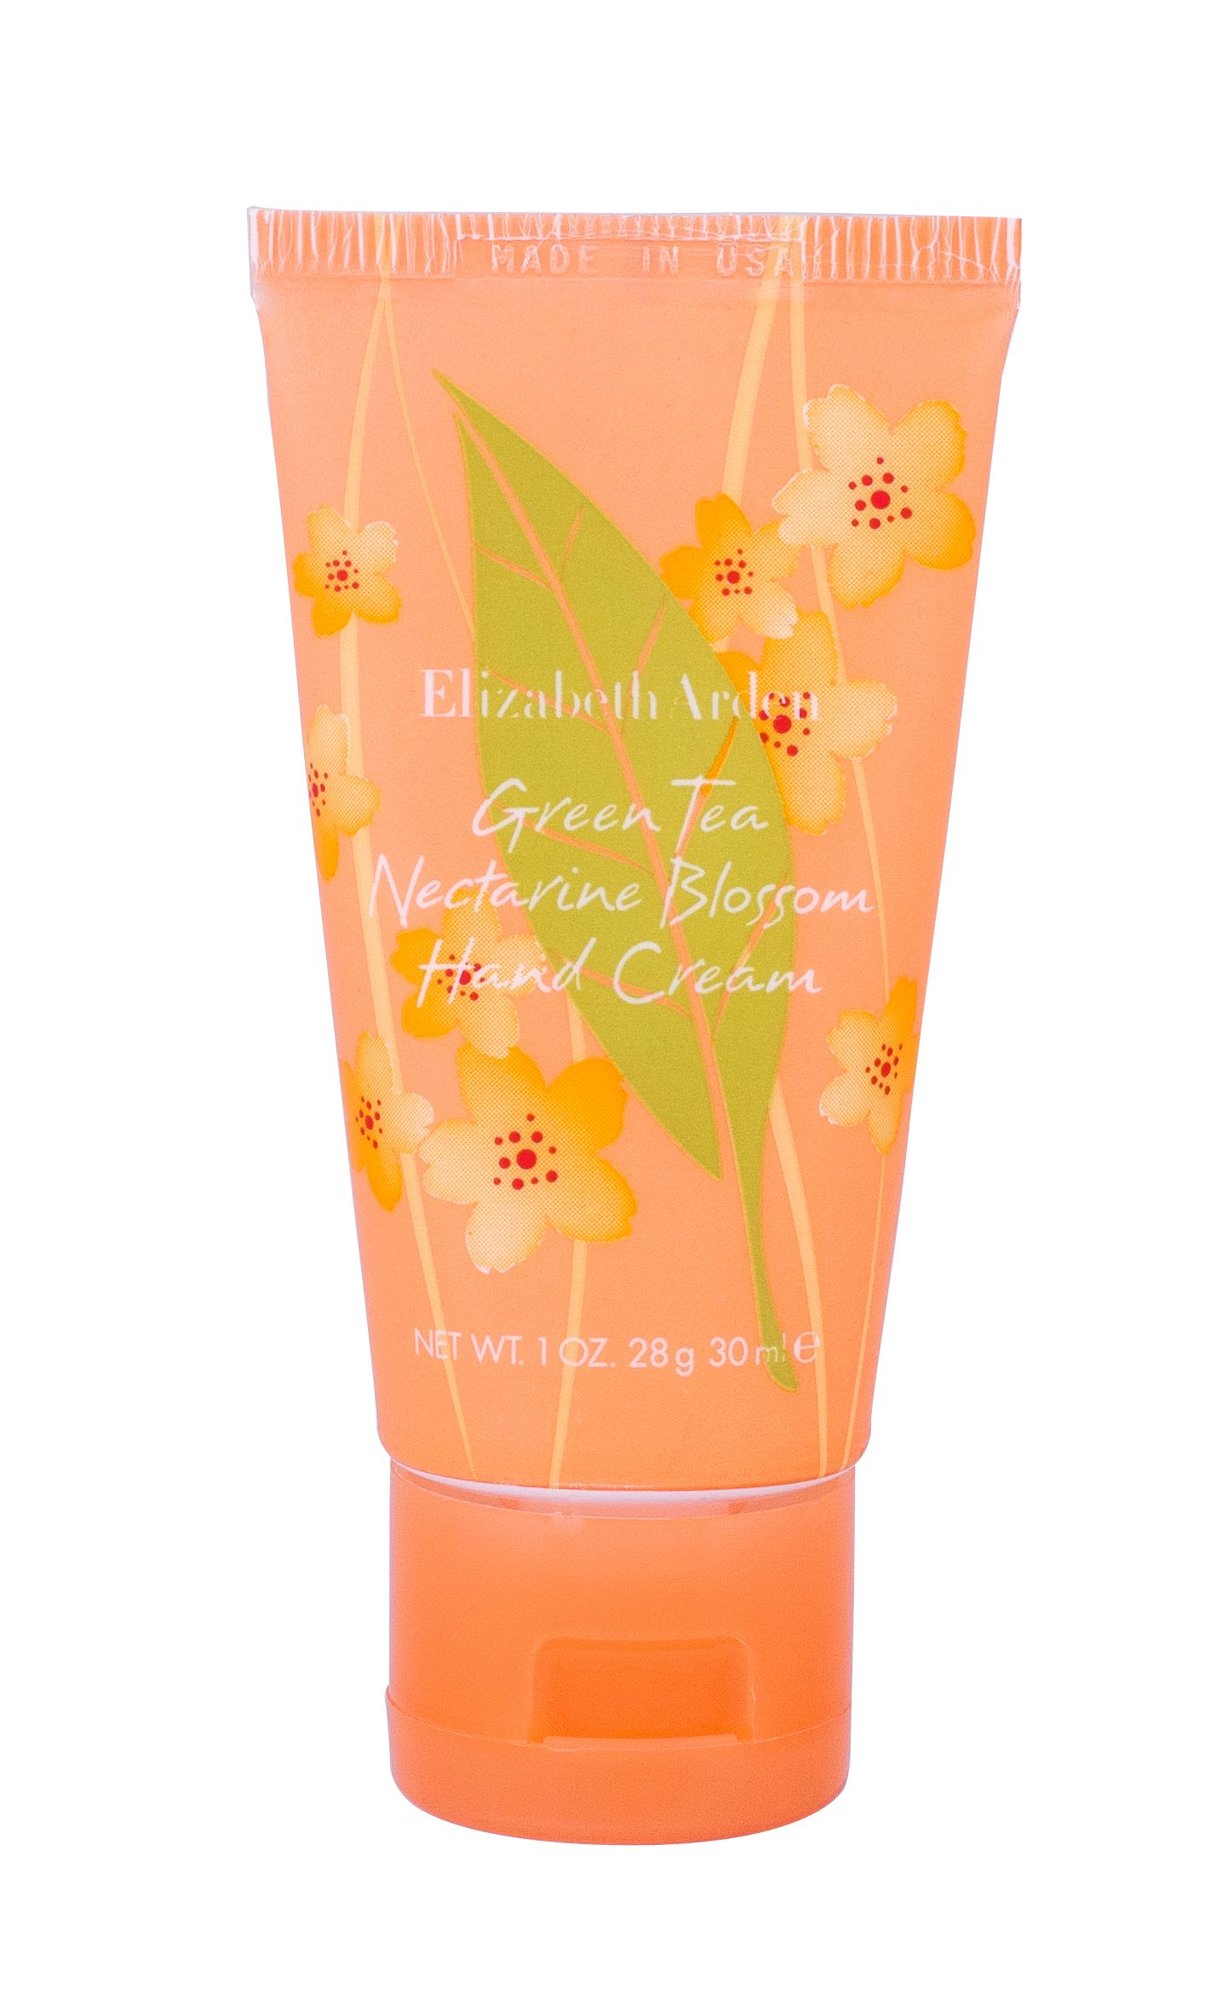 Elizabeth Arden Green Tea Nectarine Blossom rankų kremas